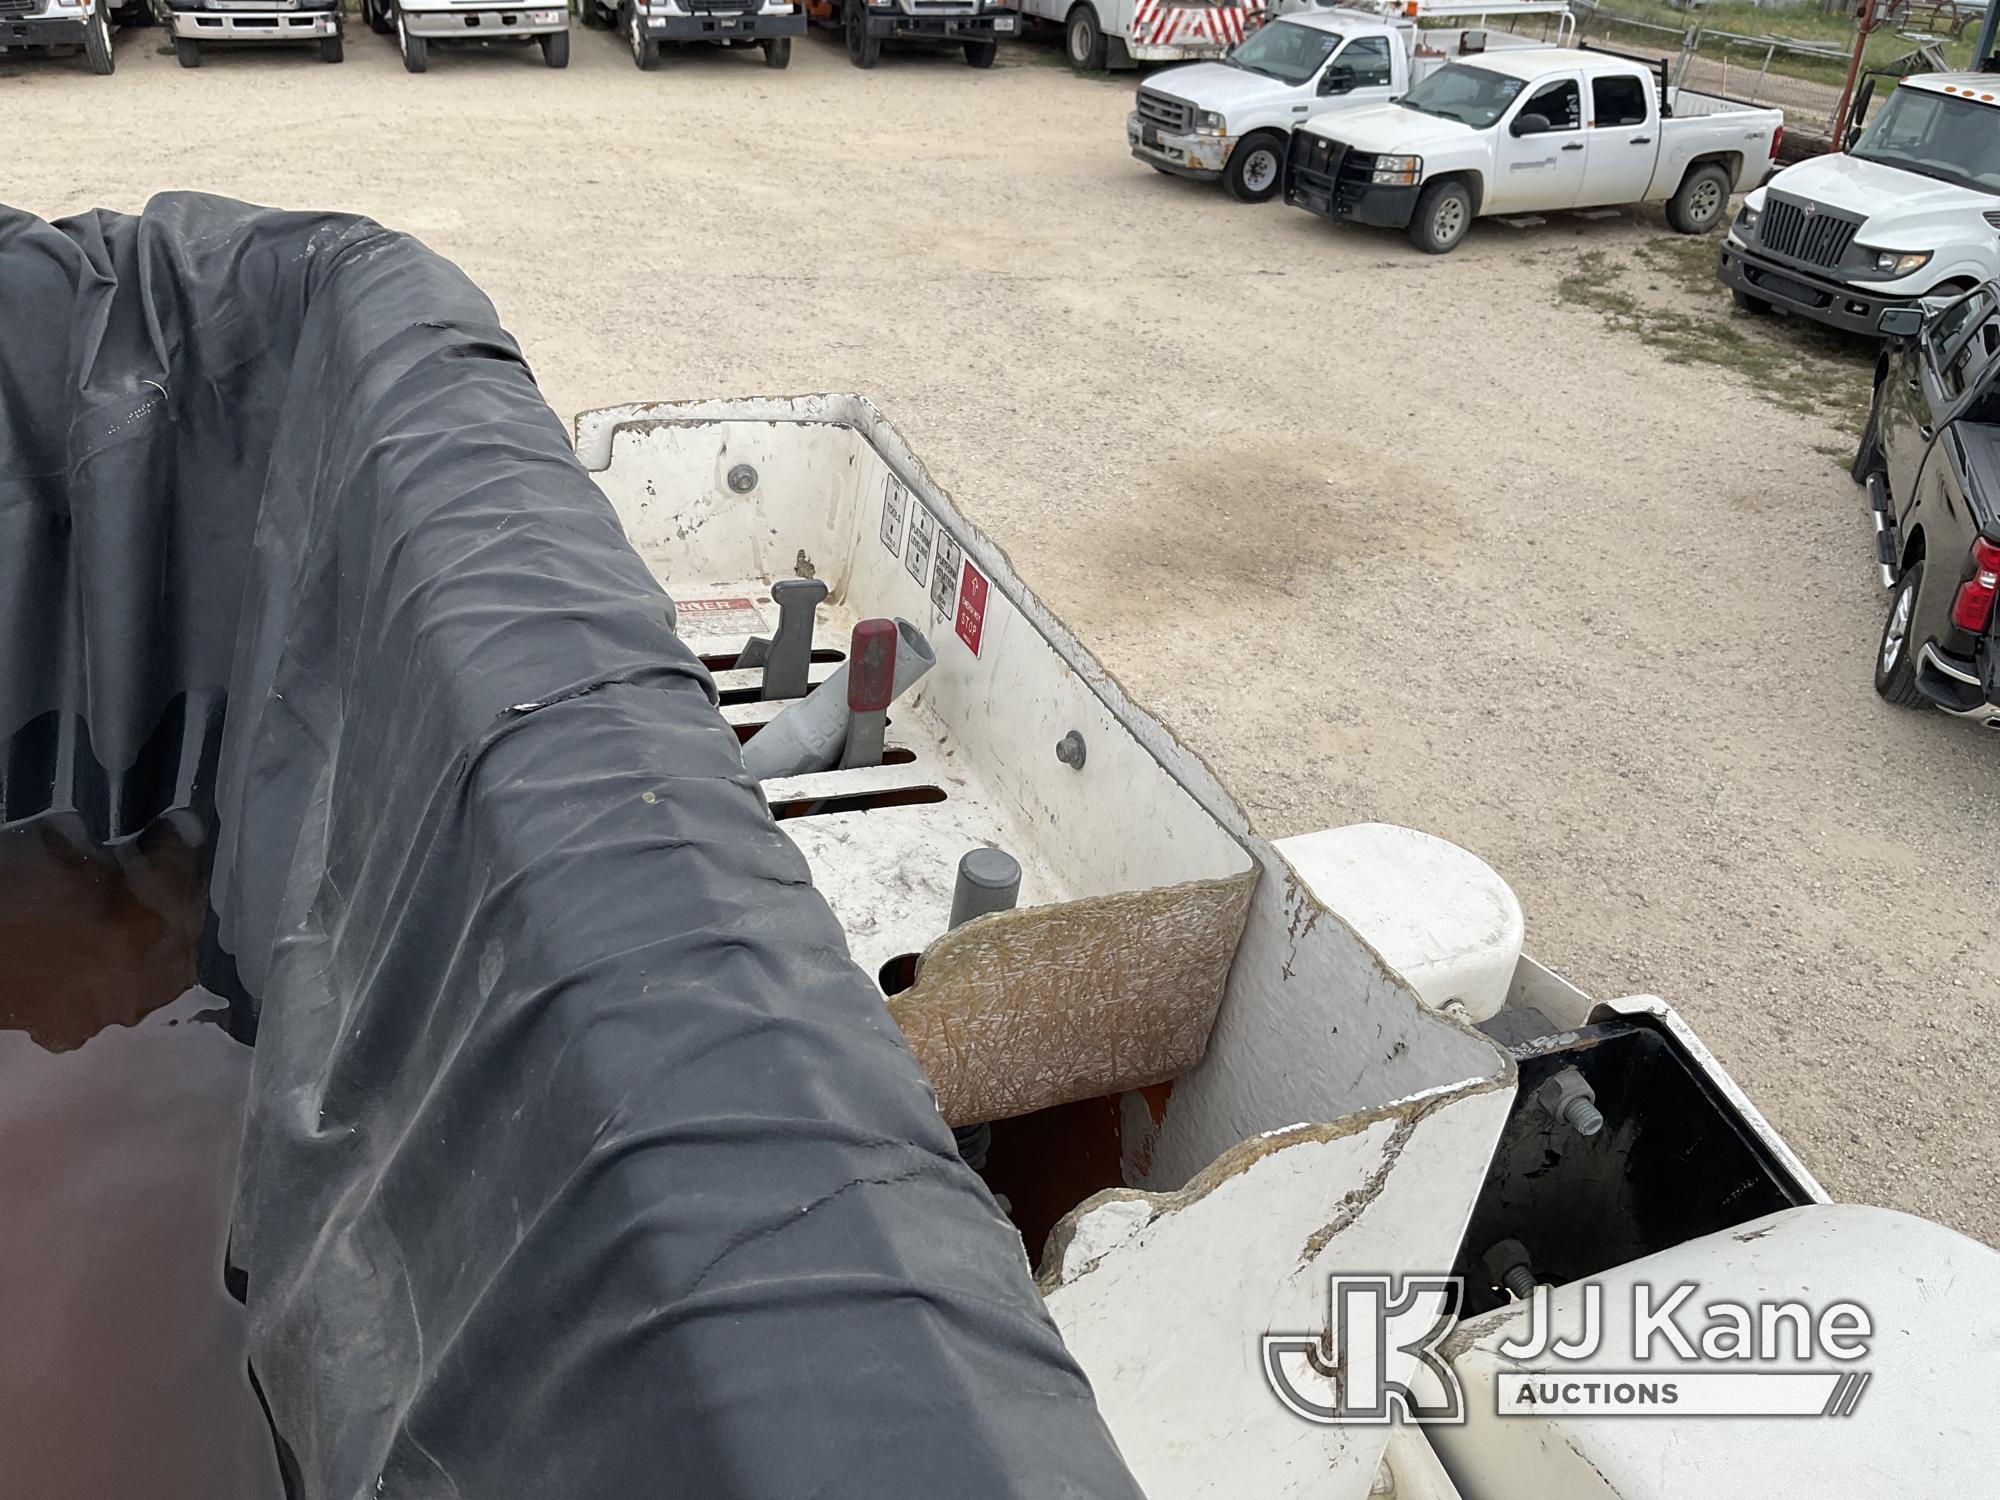 (San Antonio, TX) HiRanger TCX-60, Bucket Truck rear mounted on 2009 International 7400 Utility Truc